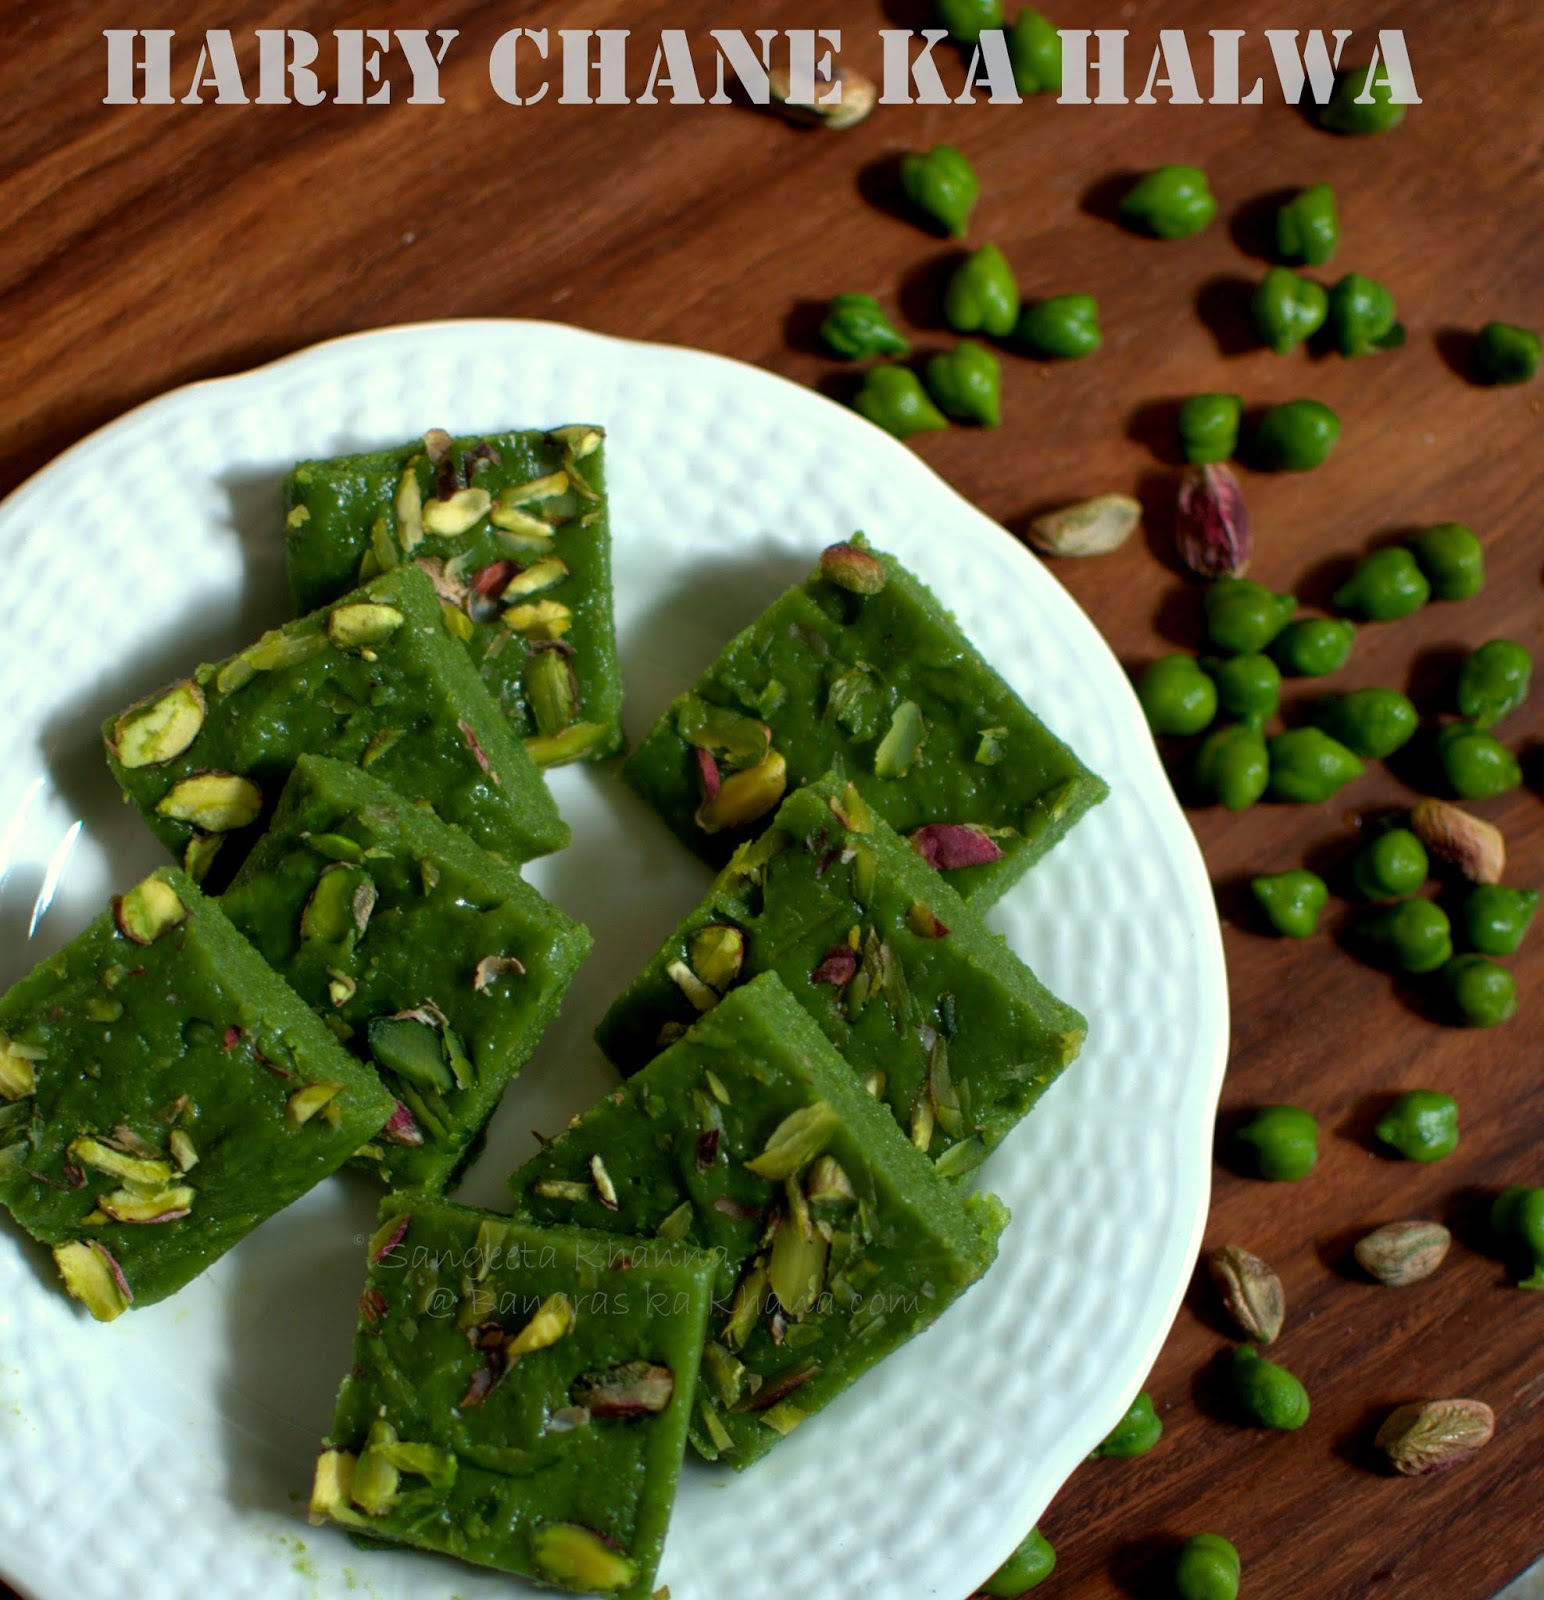 harey chane ka halwa | an unusual dessert with tender green garbanzo beans